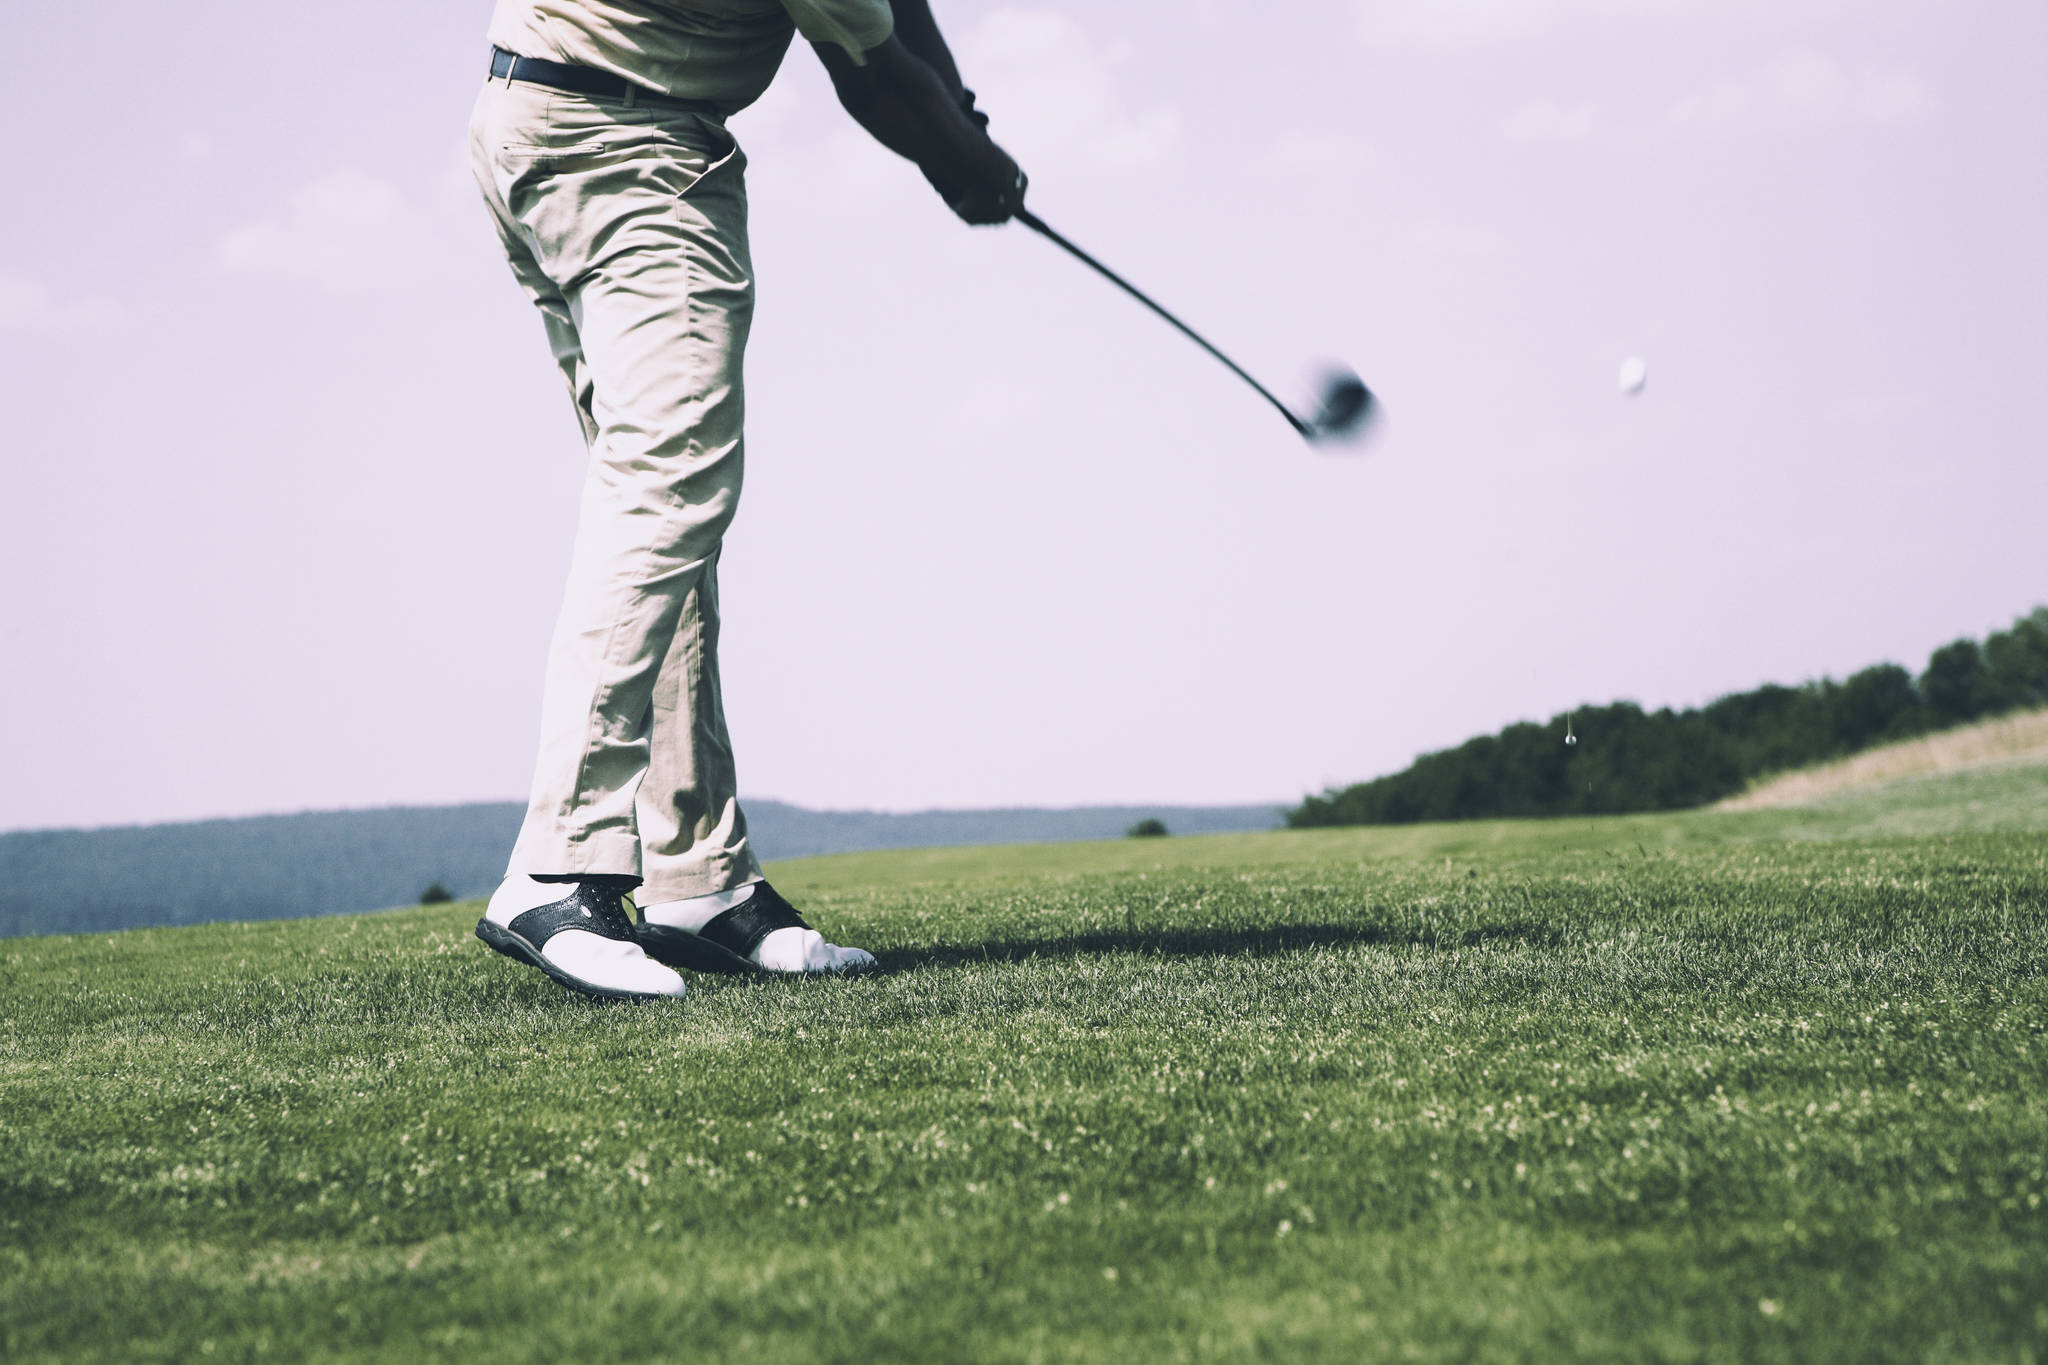 Golf tournament helps raise money for addiction rehab